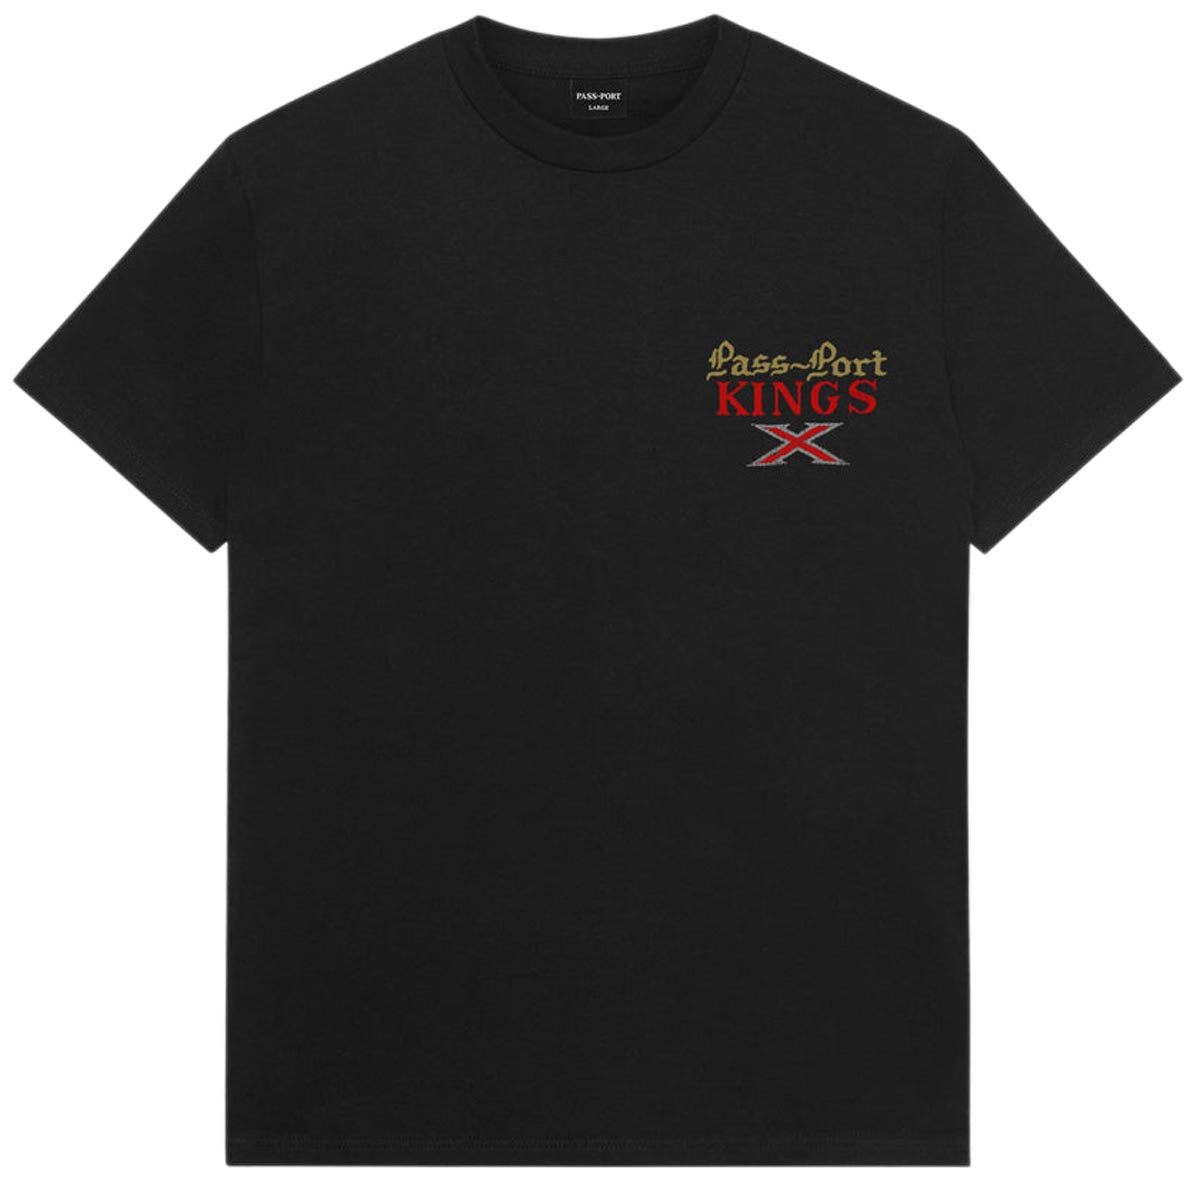 Passport Kings X T-Shirt - Black image 2